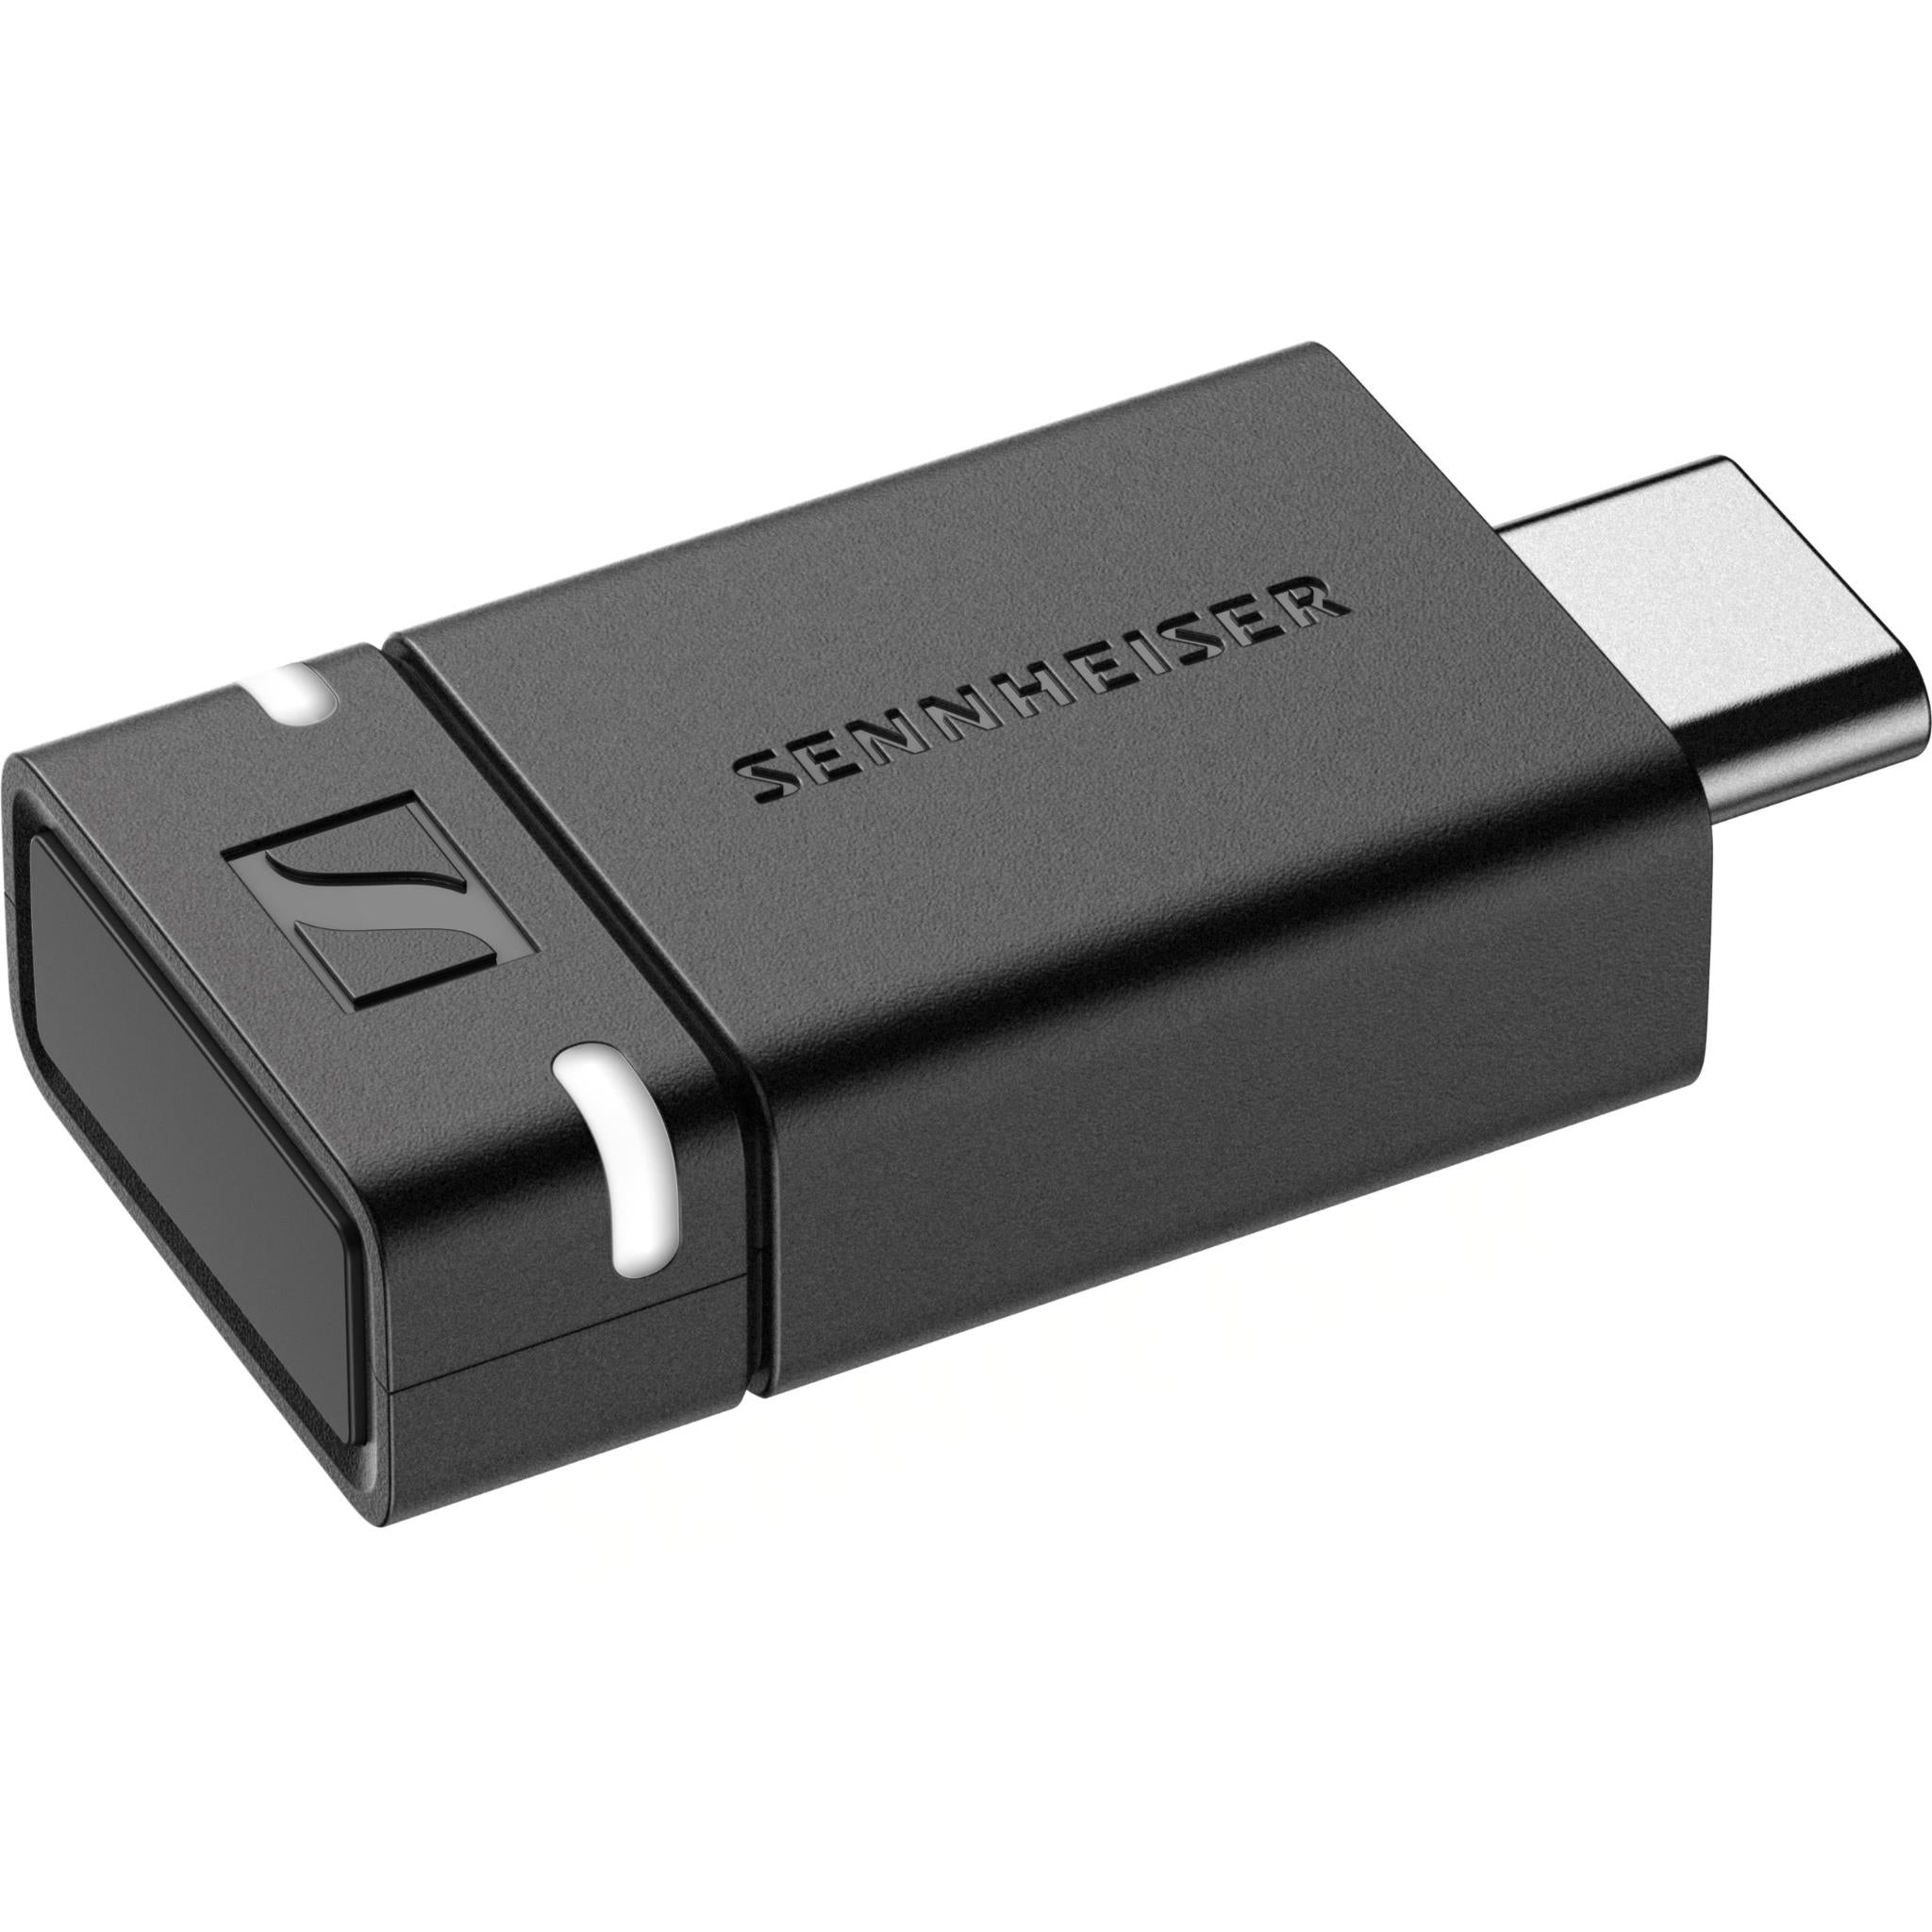 Sennheiser BTD 600 Bluetooth USB Adapter - JB Hi-Fi